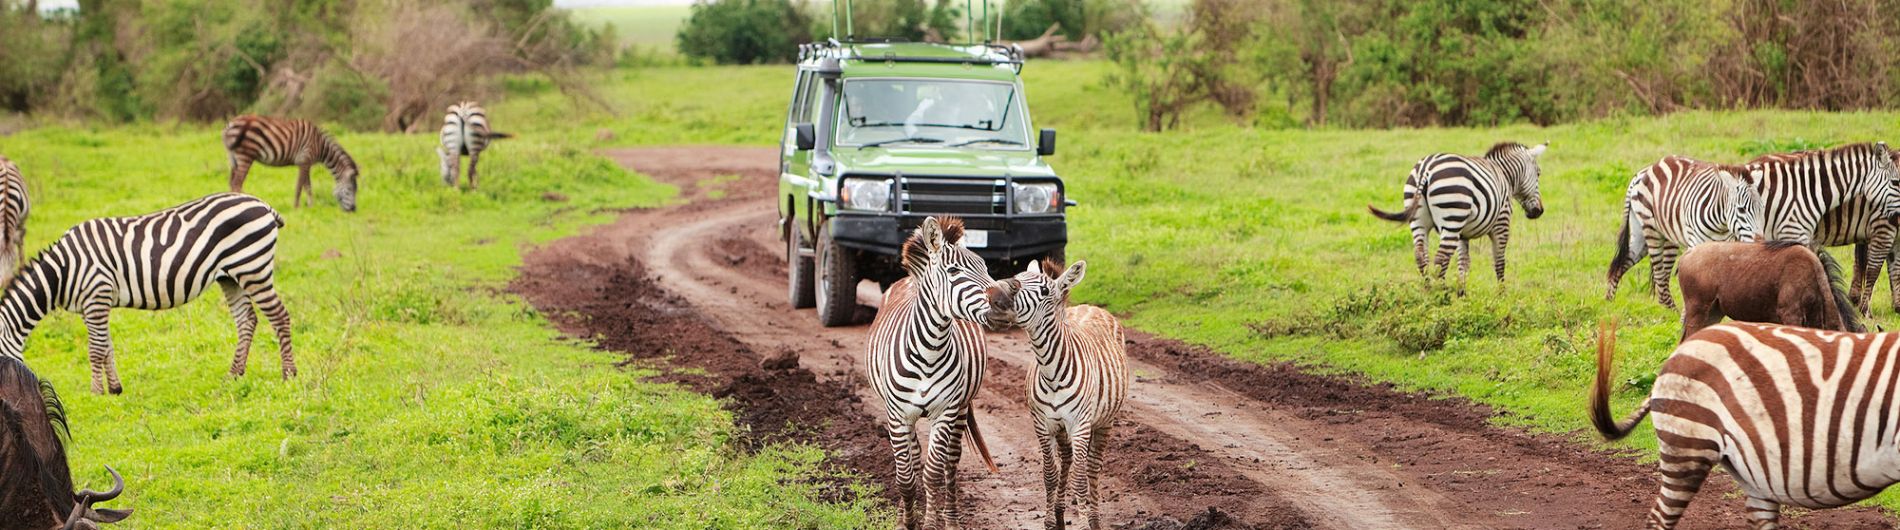 Safari tour holiday 